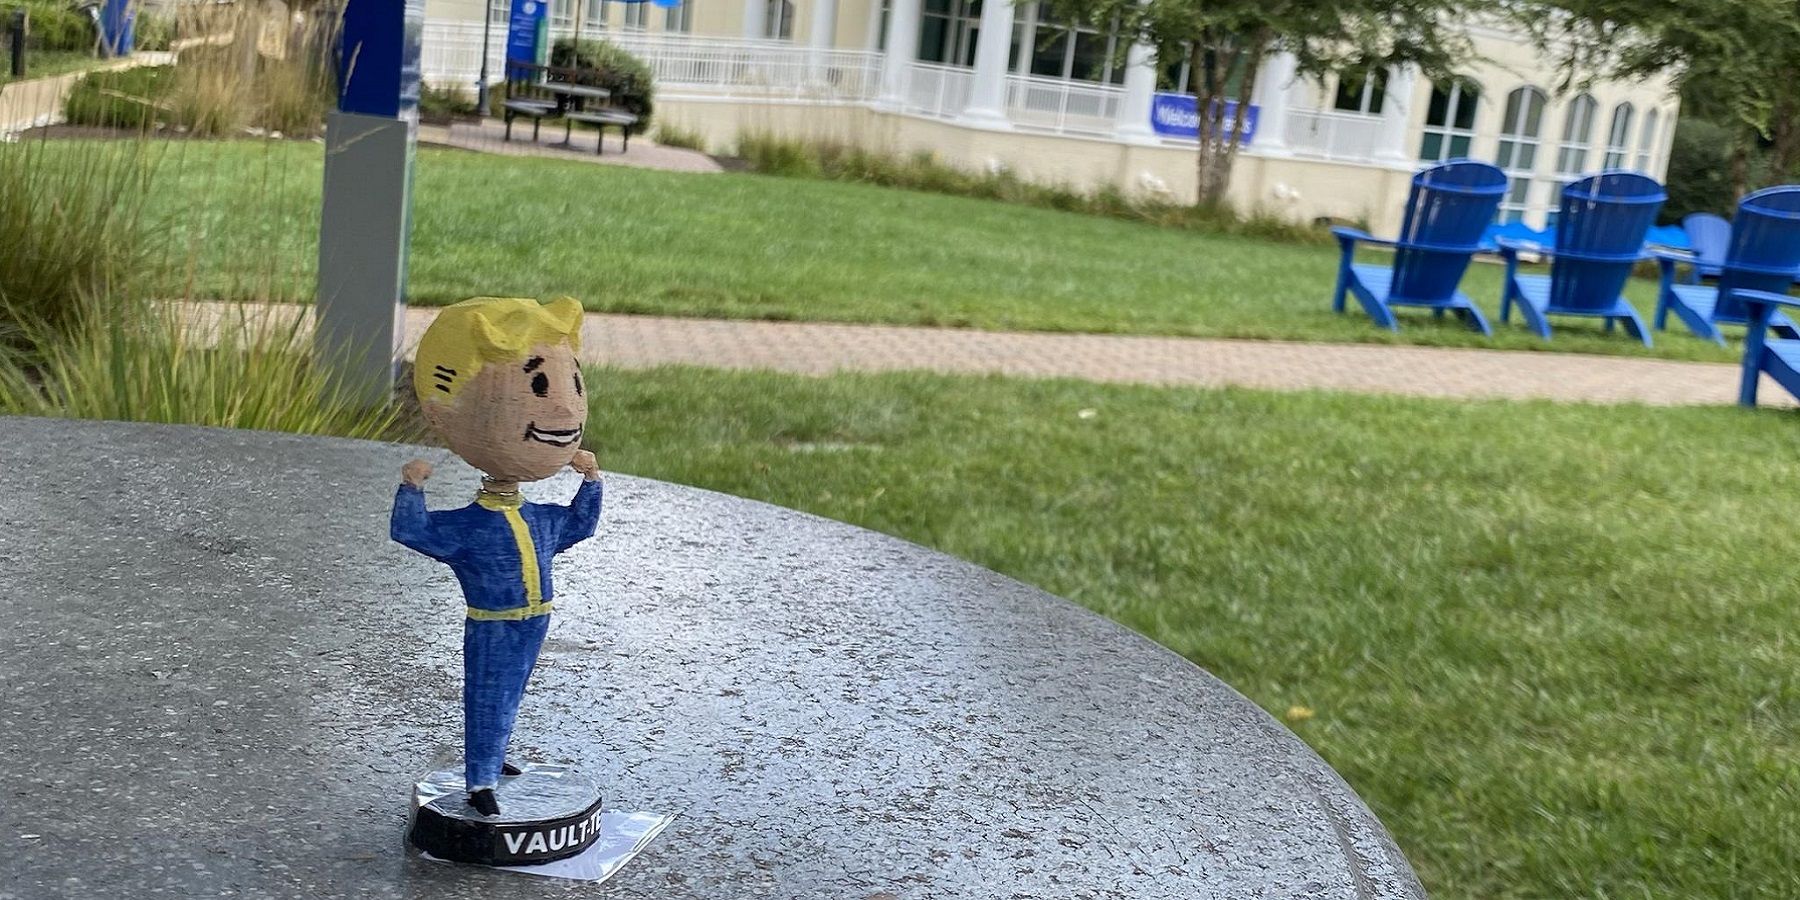 Photo of a Fallout 3 bobblehead figure outside near some grass.